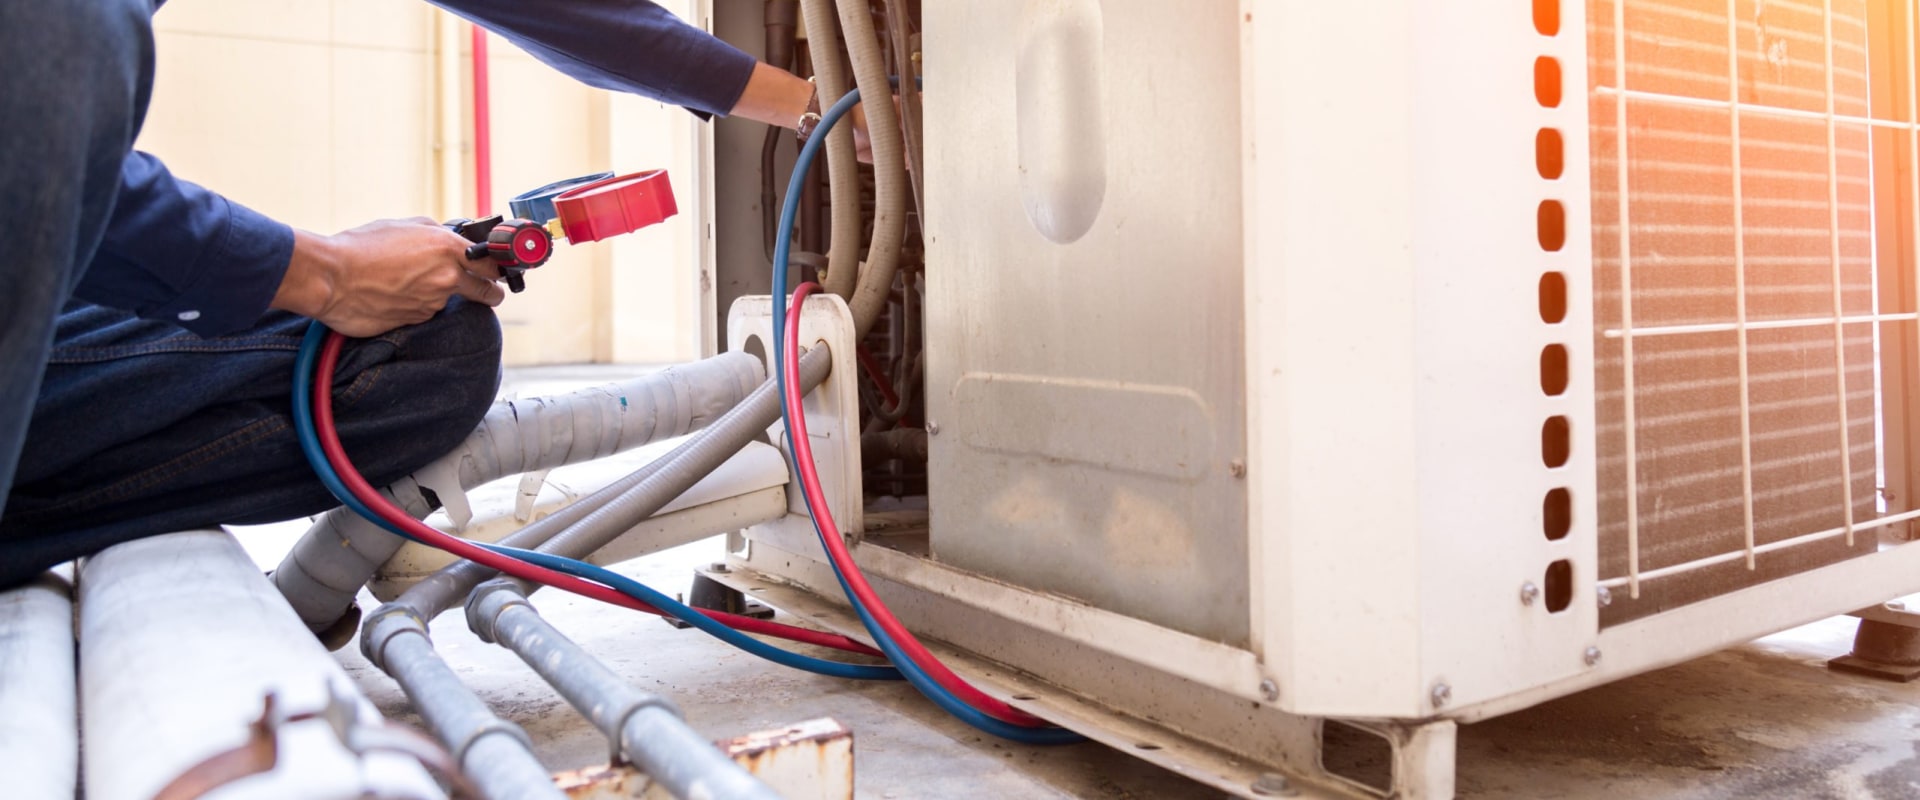 How to Easily Find a Reputable HVAC Maintenance Company Near You